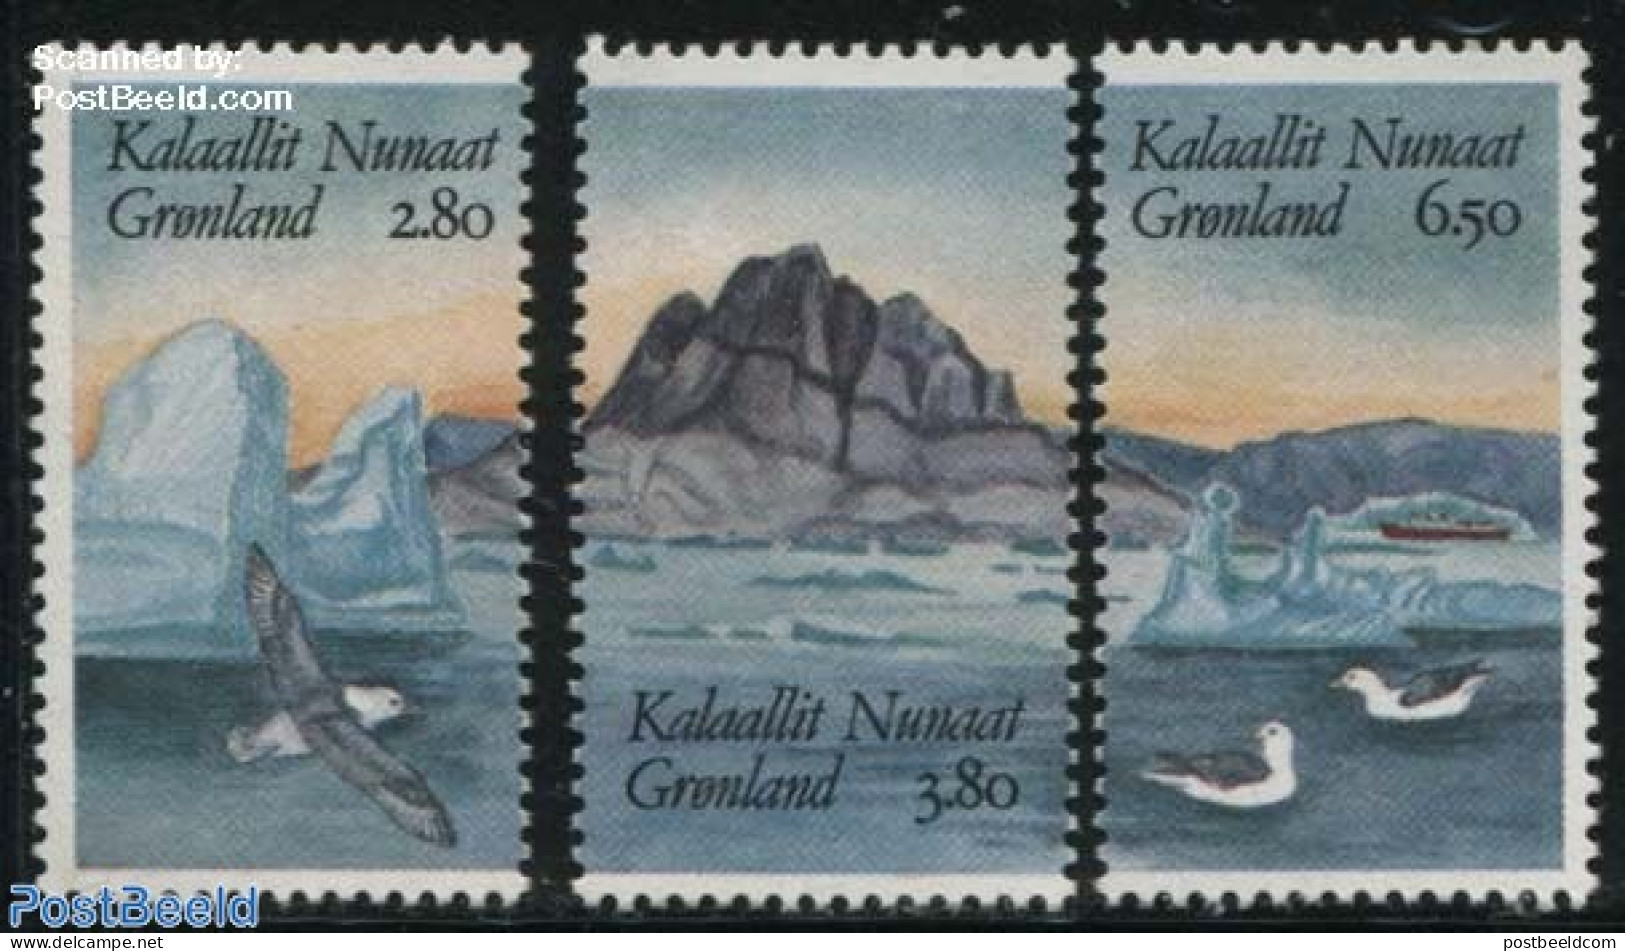 Greenland 1987 Hafnia 87 3v, Mint NH, Nature - Transport - Birds - Ships And Boats - Ongebruikt